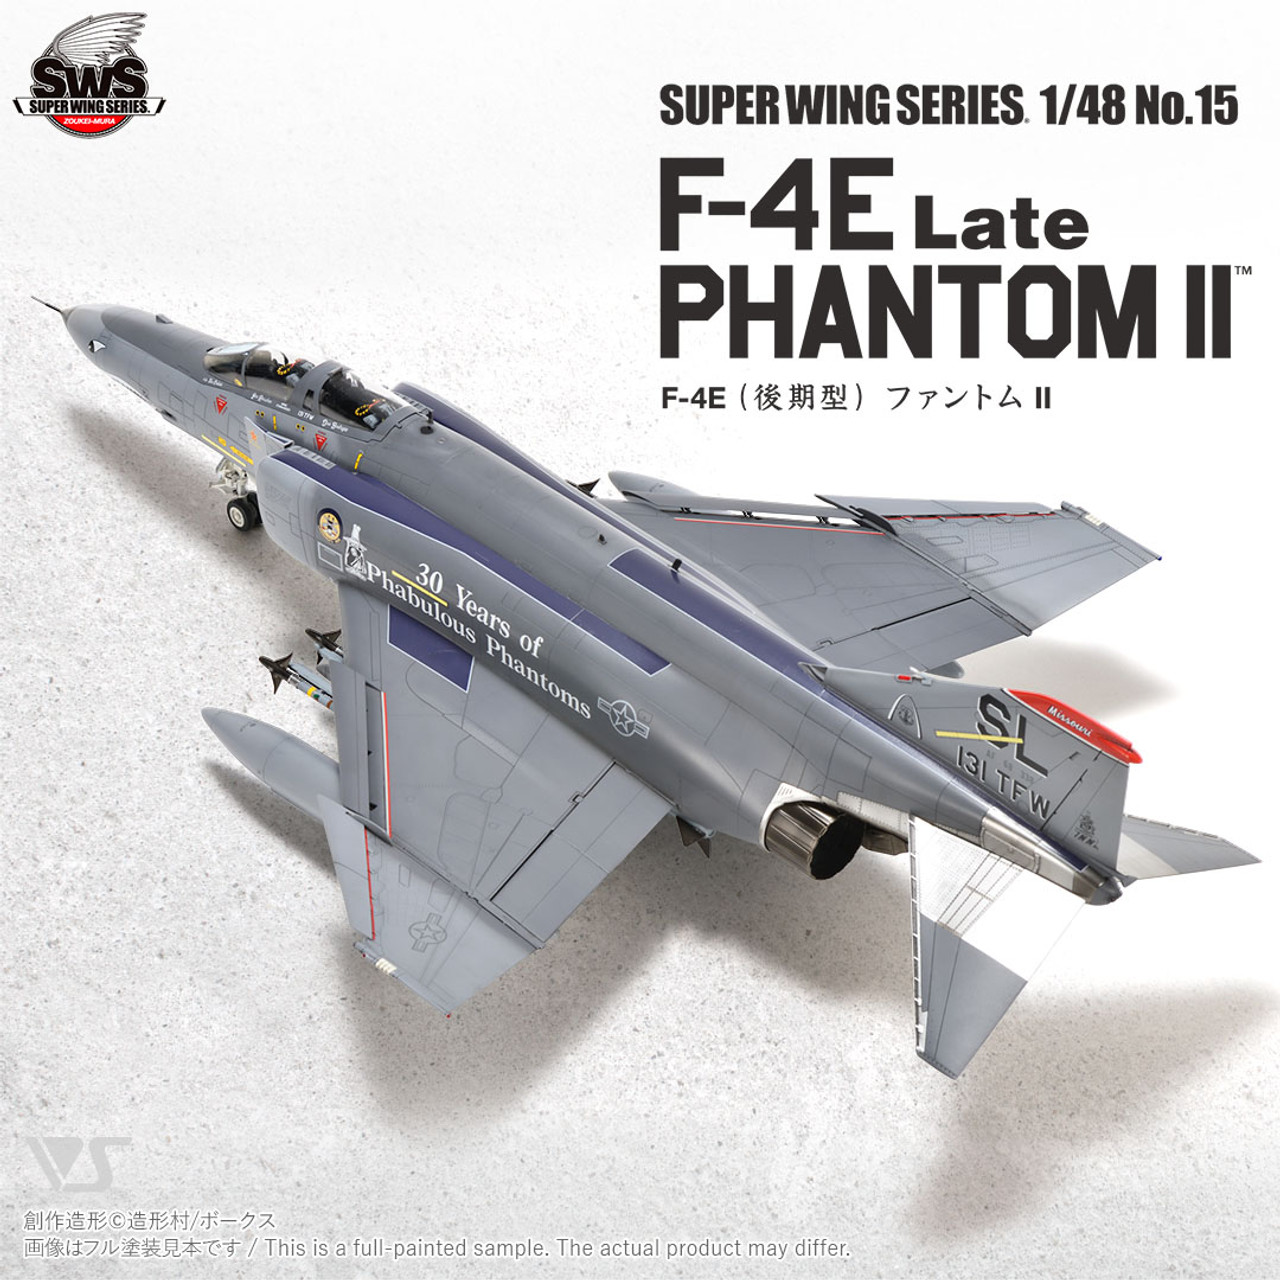 1/48 SWS F-4E (late model) Phantom II - No.15